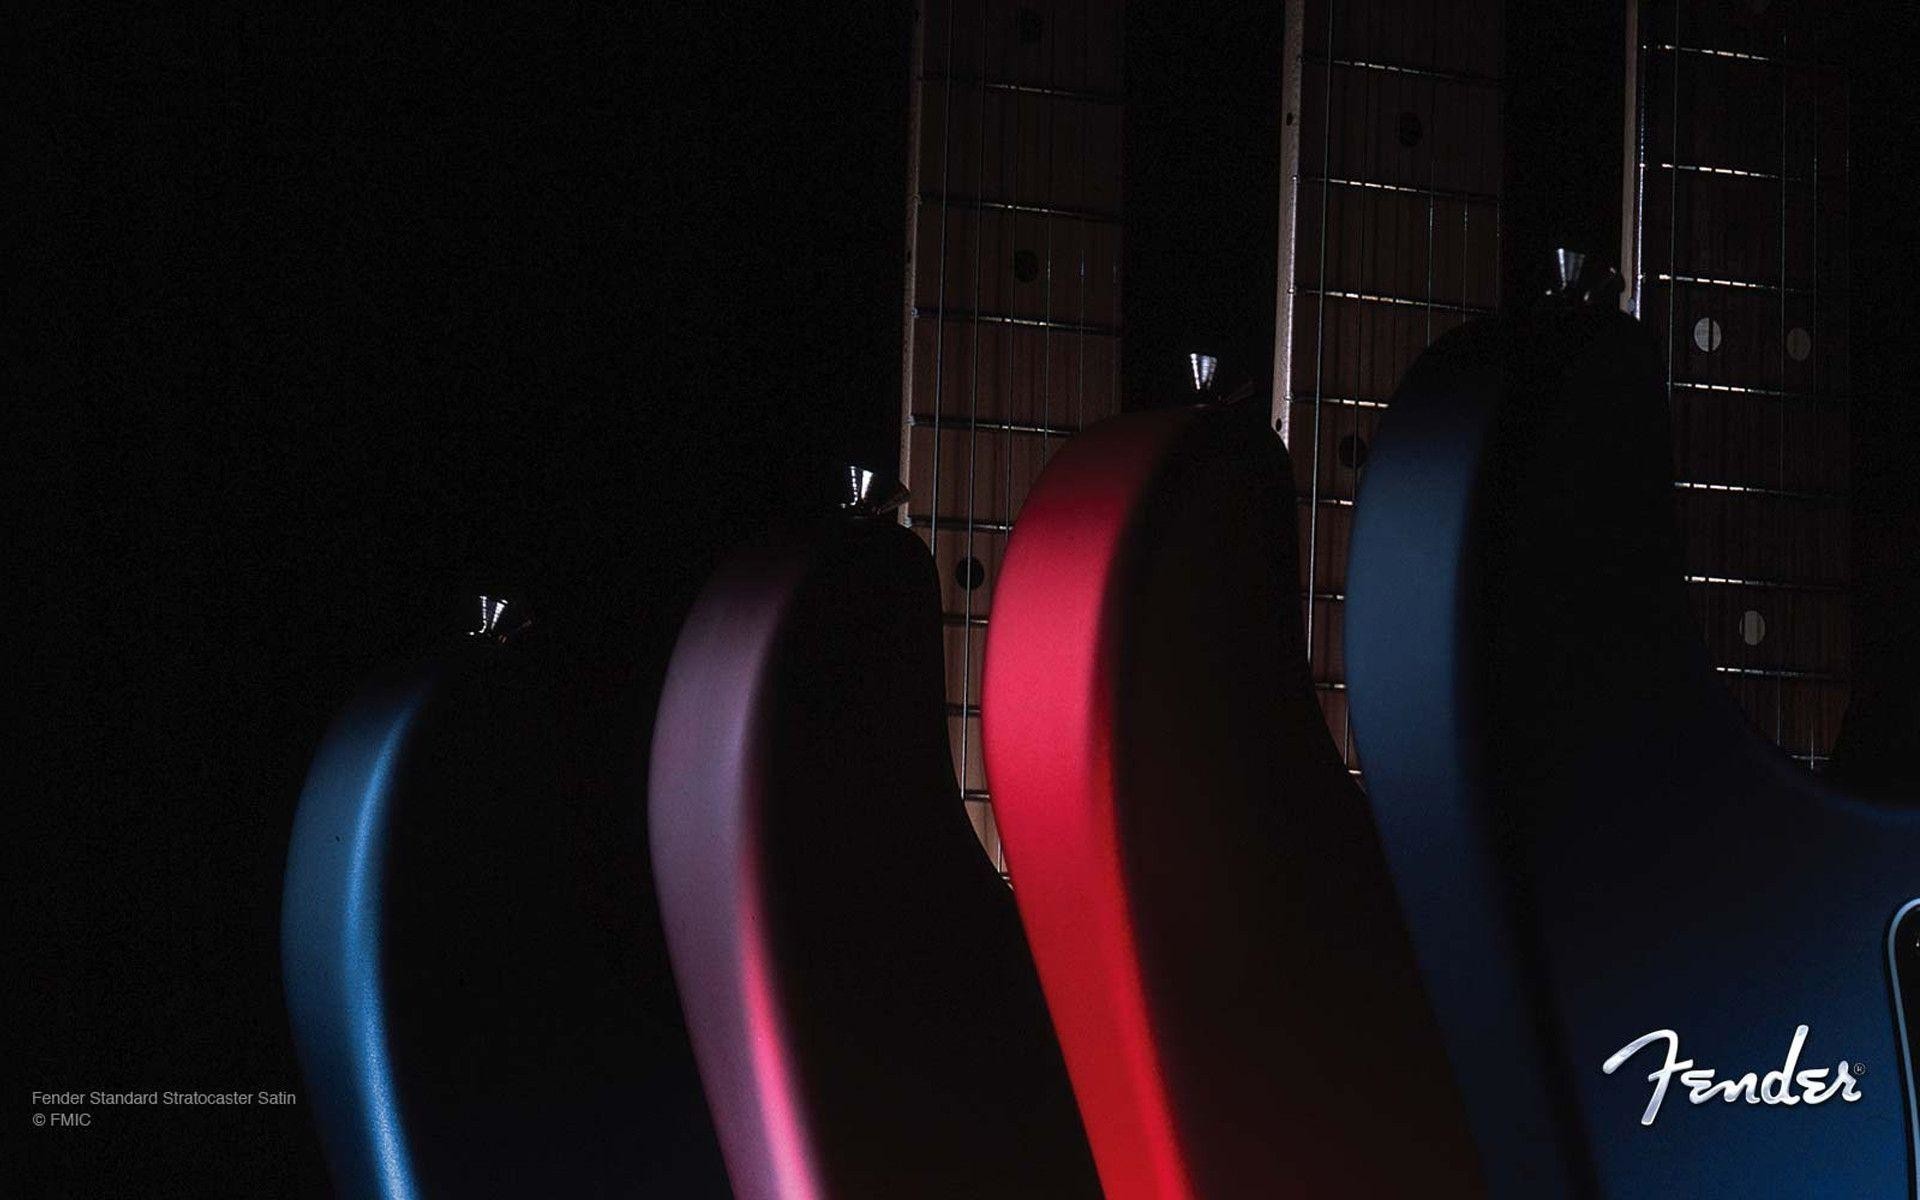 Fender Stratocaster Wallpaper (52+ images)